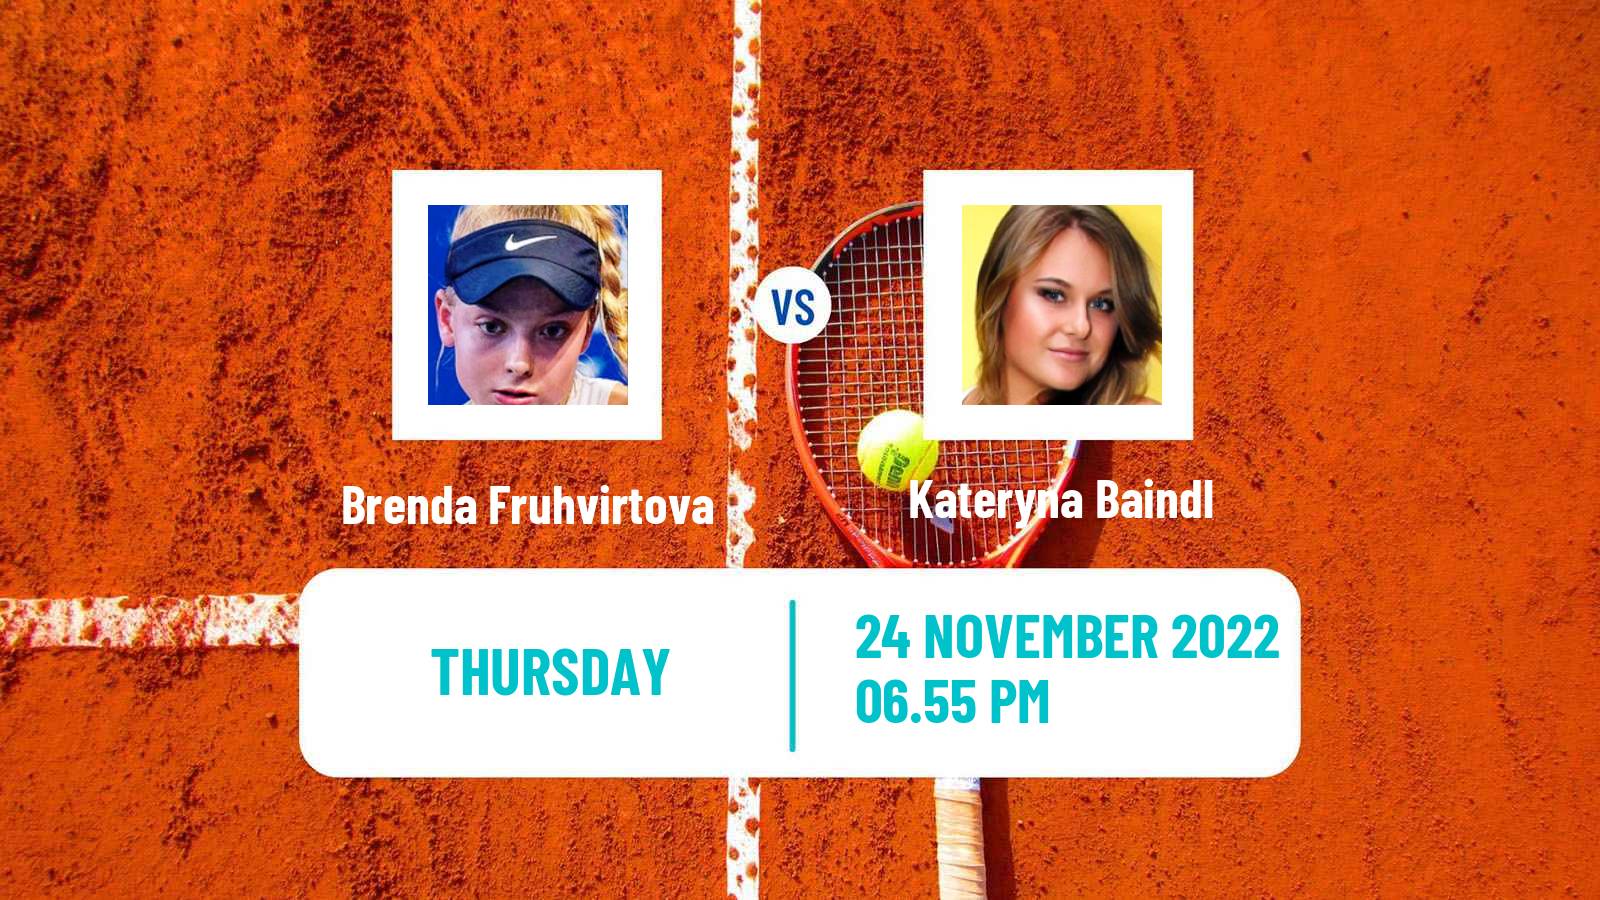 Tennis ATP Challenger Brenda Fruhvirtova - Kateryna Baindl